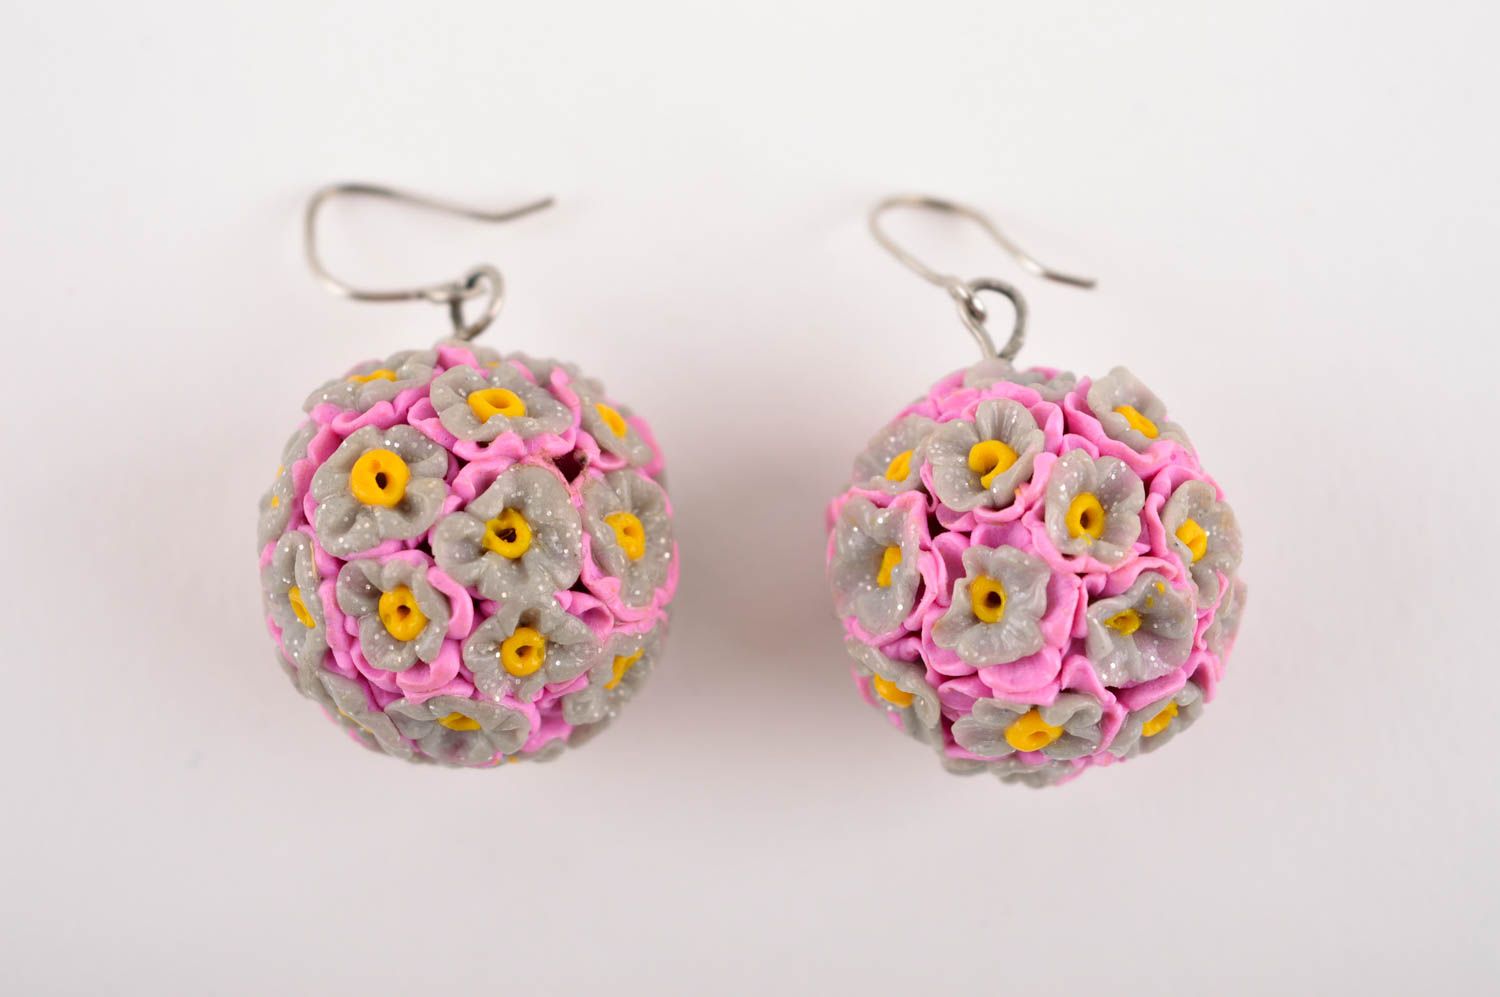 Unusual handmade plastic earrings flower earrings fashion accessories gift ideas photo 3